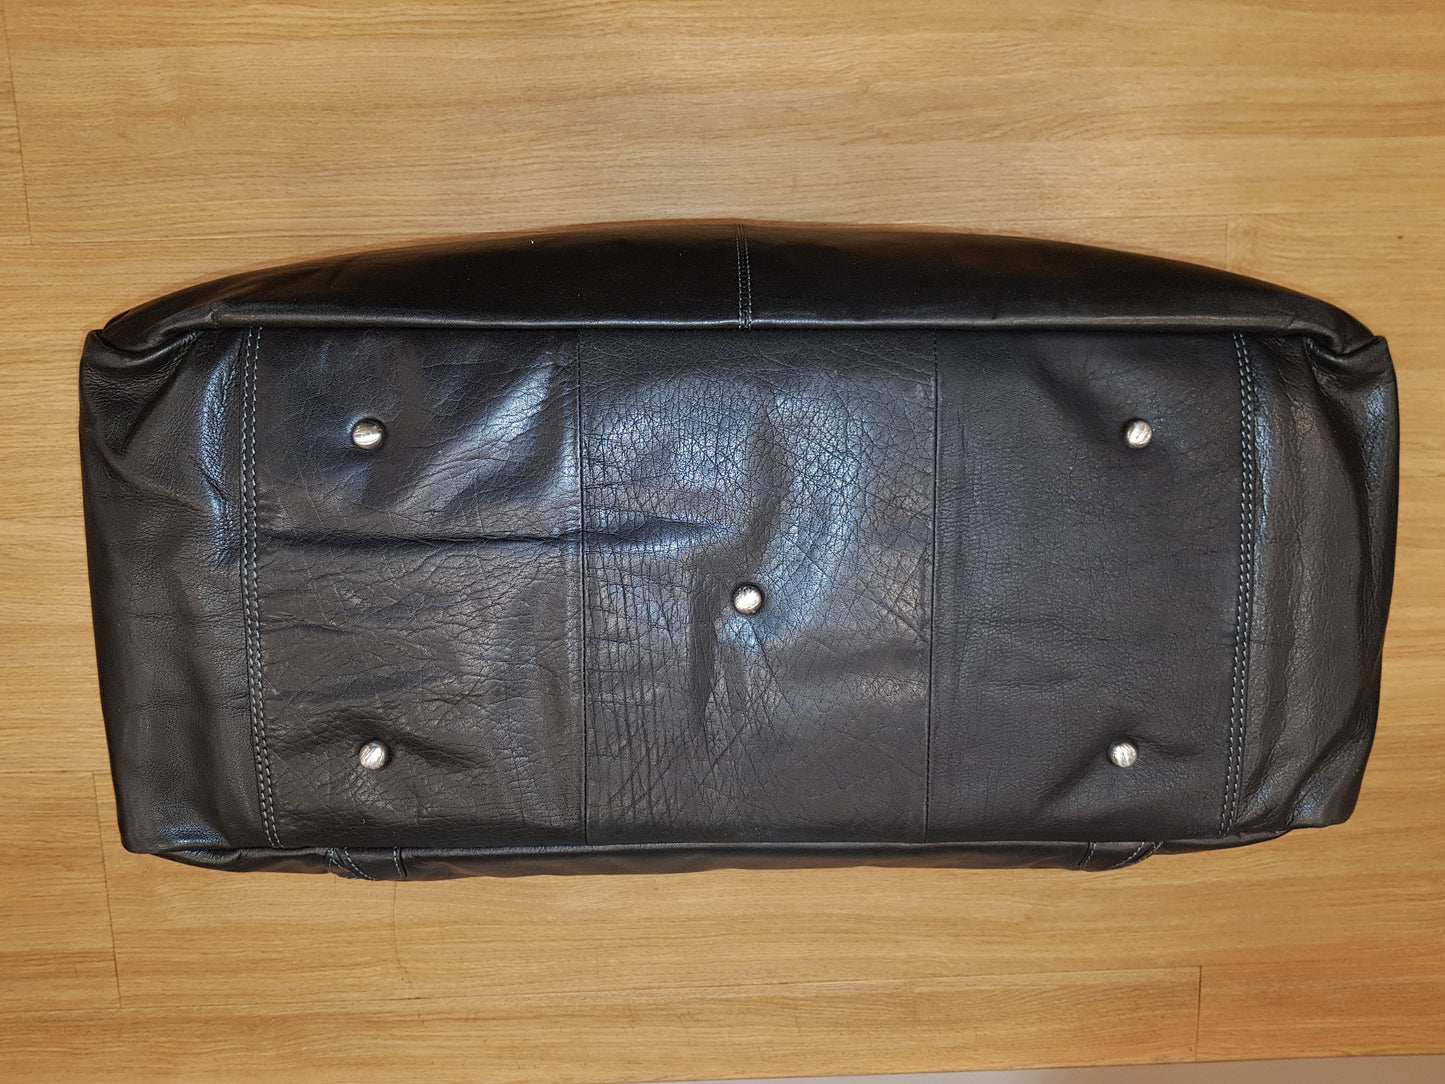 Rugged Hide - Travel Bag Leather Overnight Bag - rainbowbags